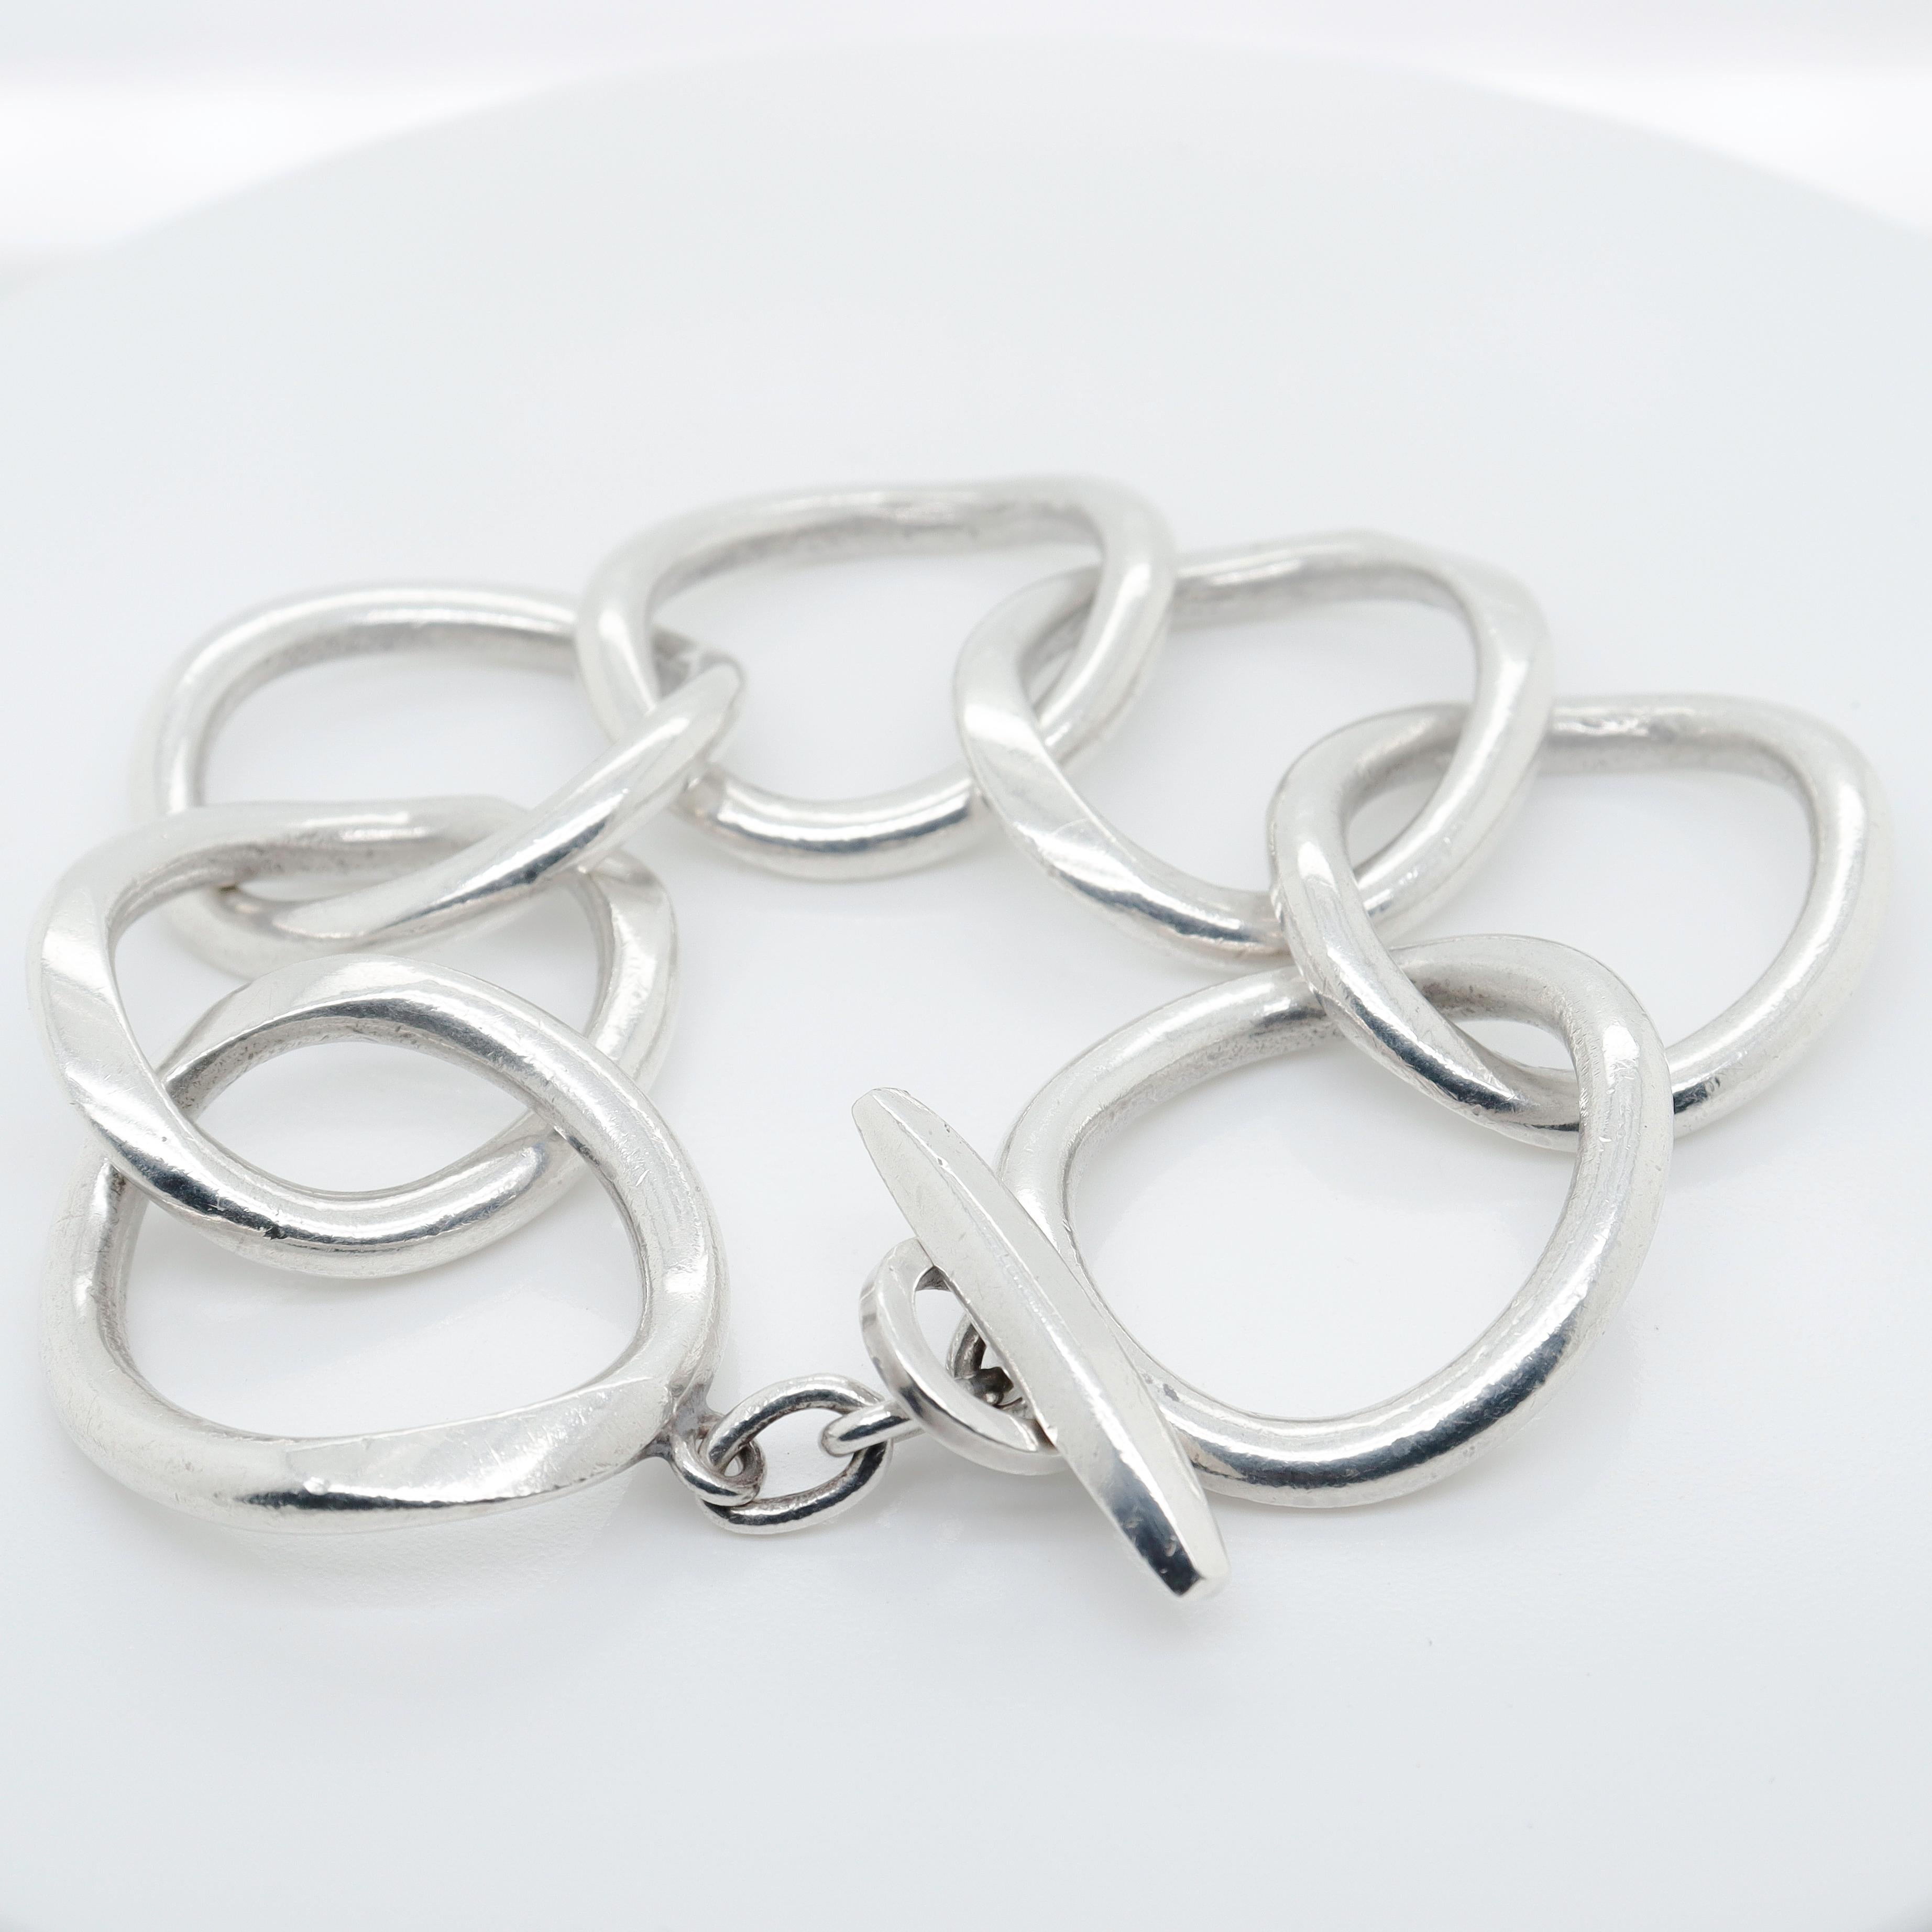 Women's Signed Handmade Danish Modern Sterling Silver Large Link Bracelet by Randers For Sale